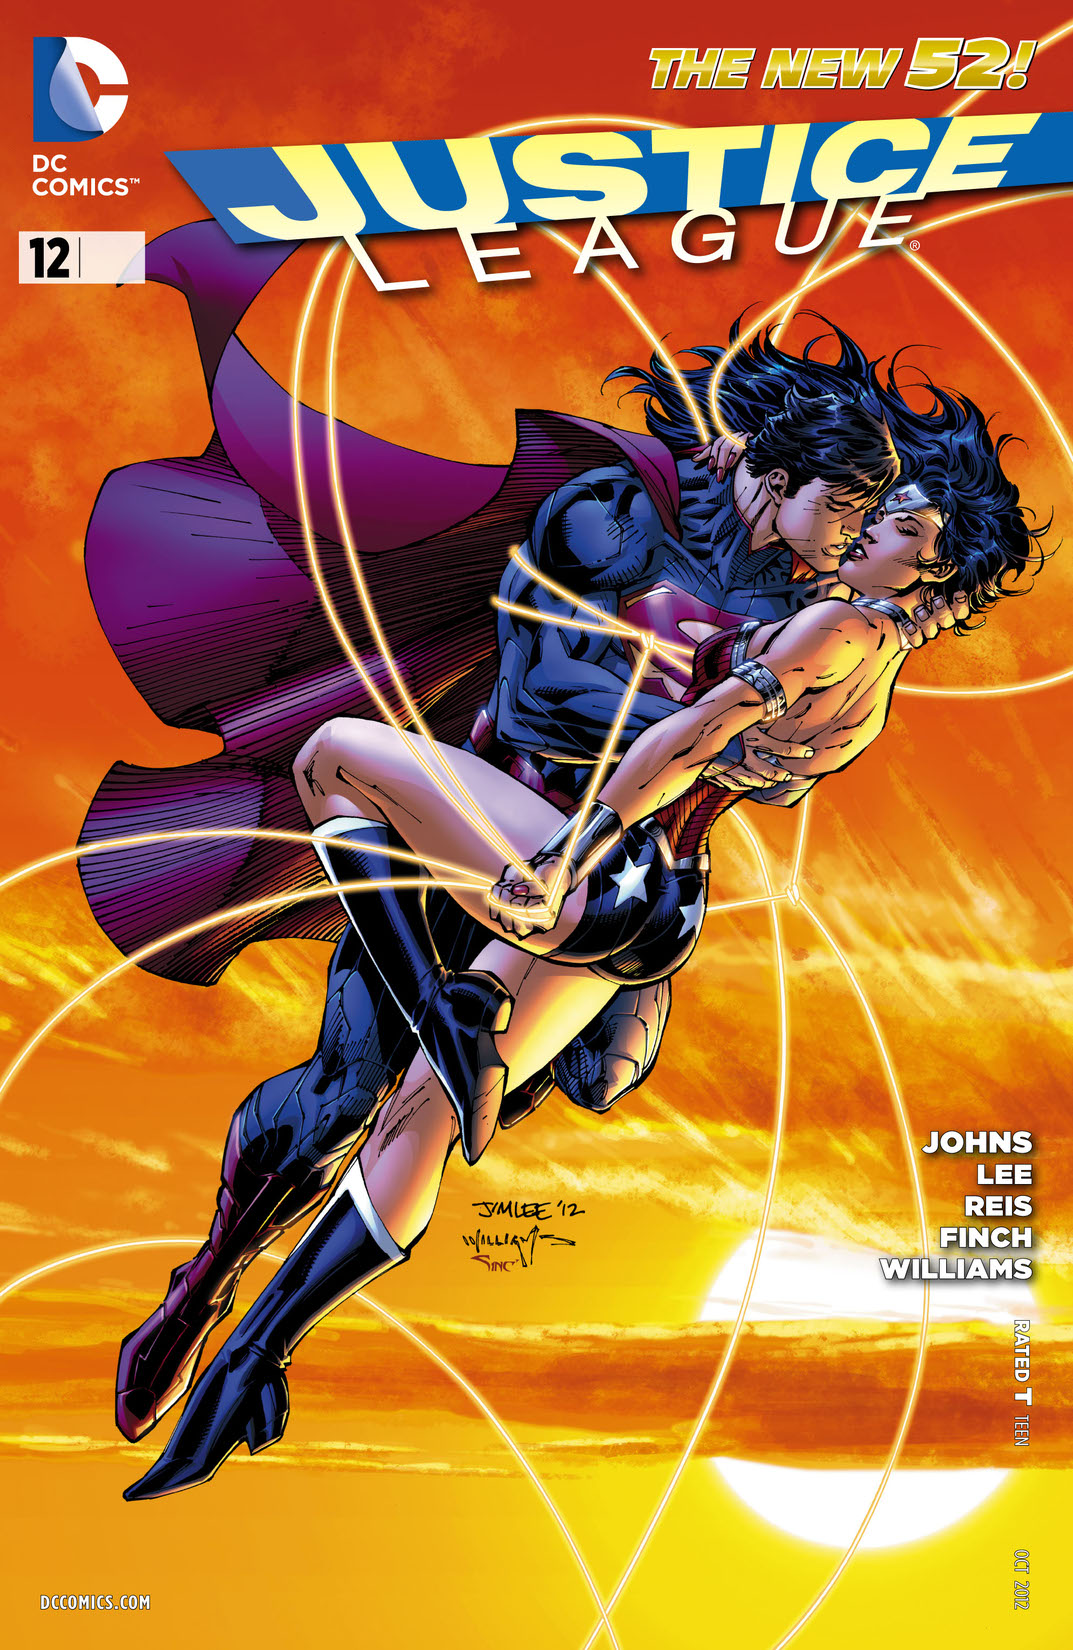 Justice League (2011-) #12 preview images